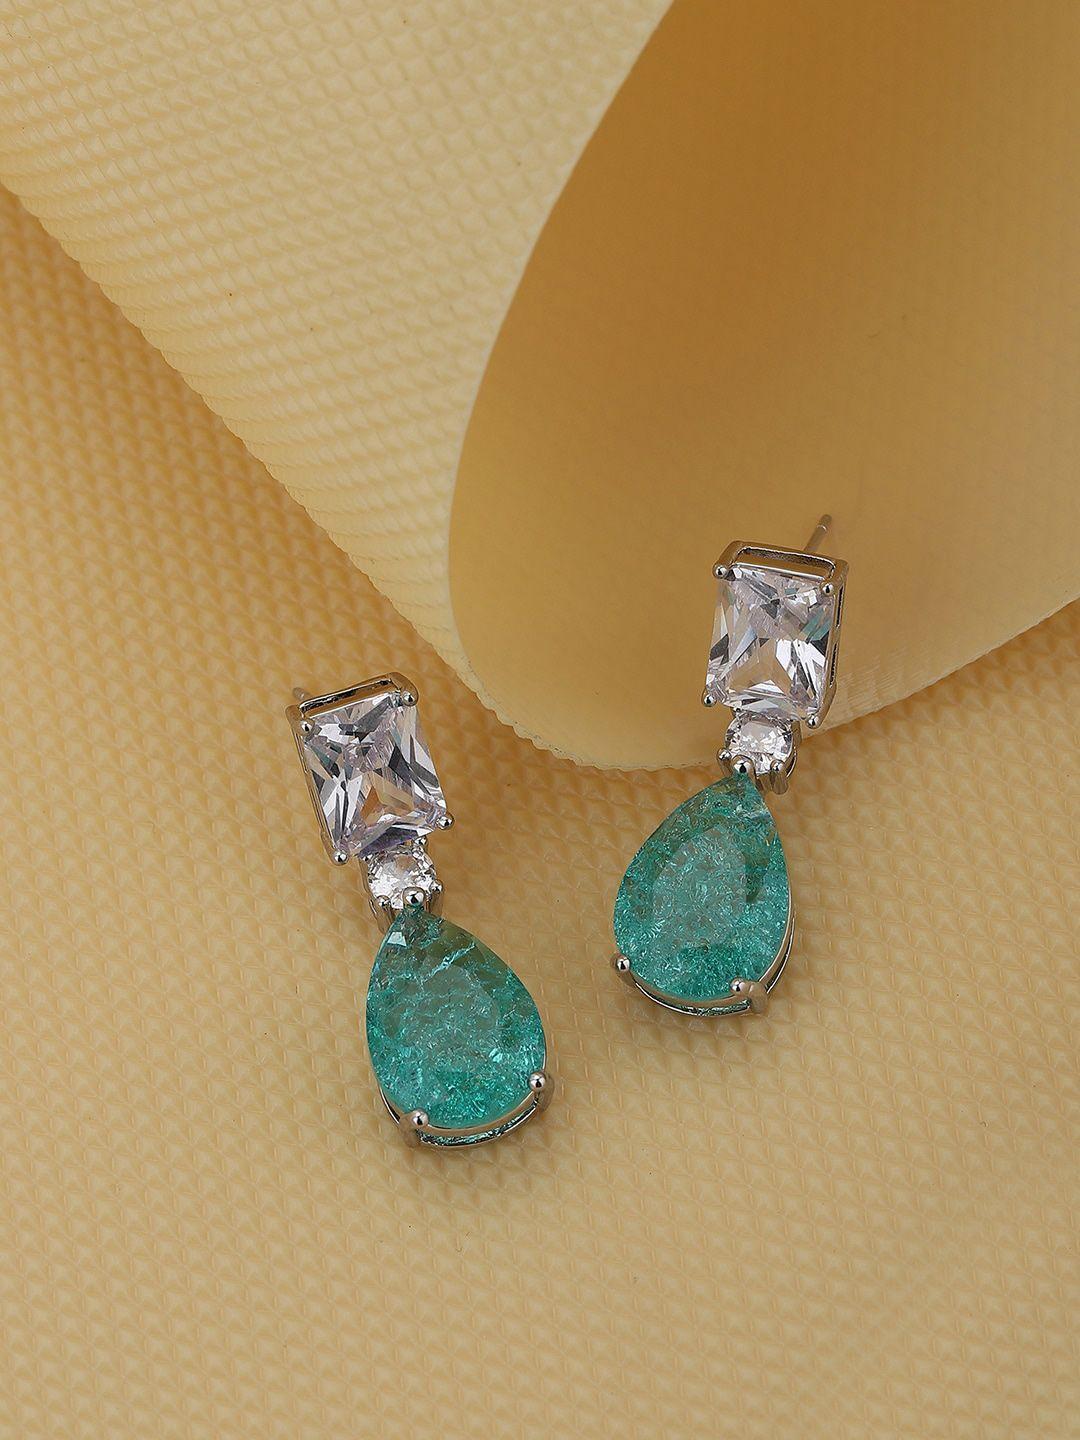 carlton london rhodium-plated crystals teardrop shaped drop earrings